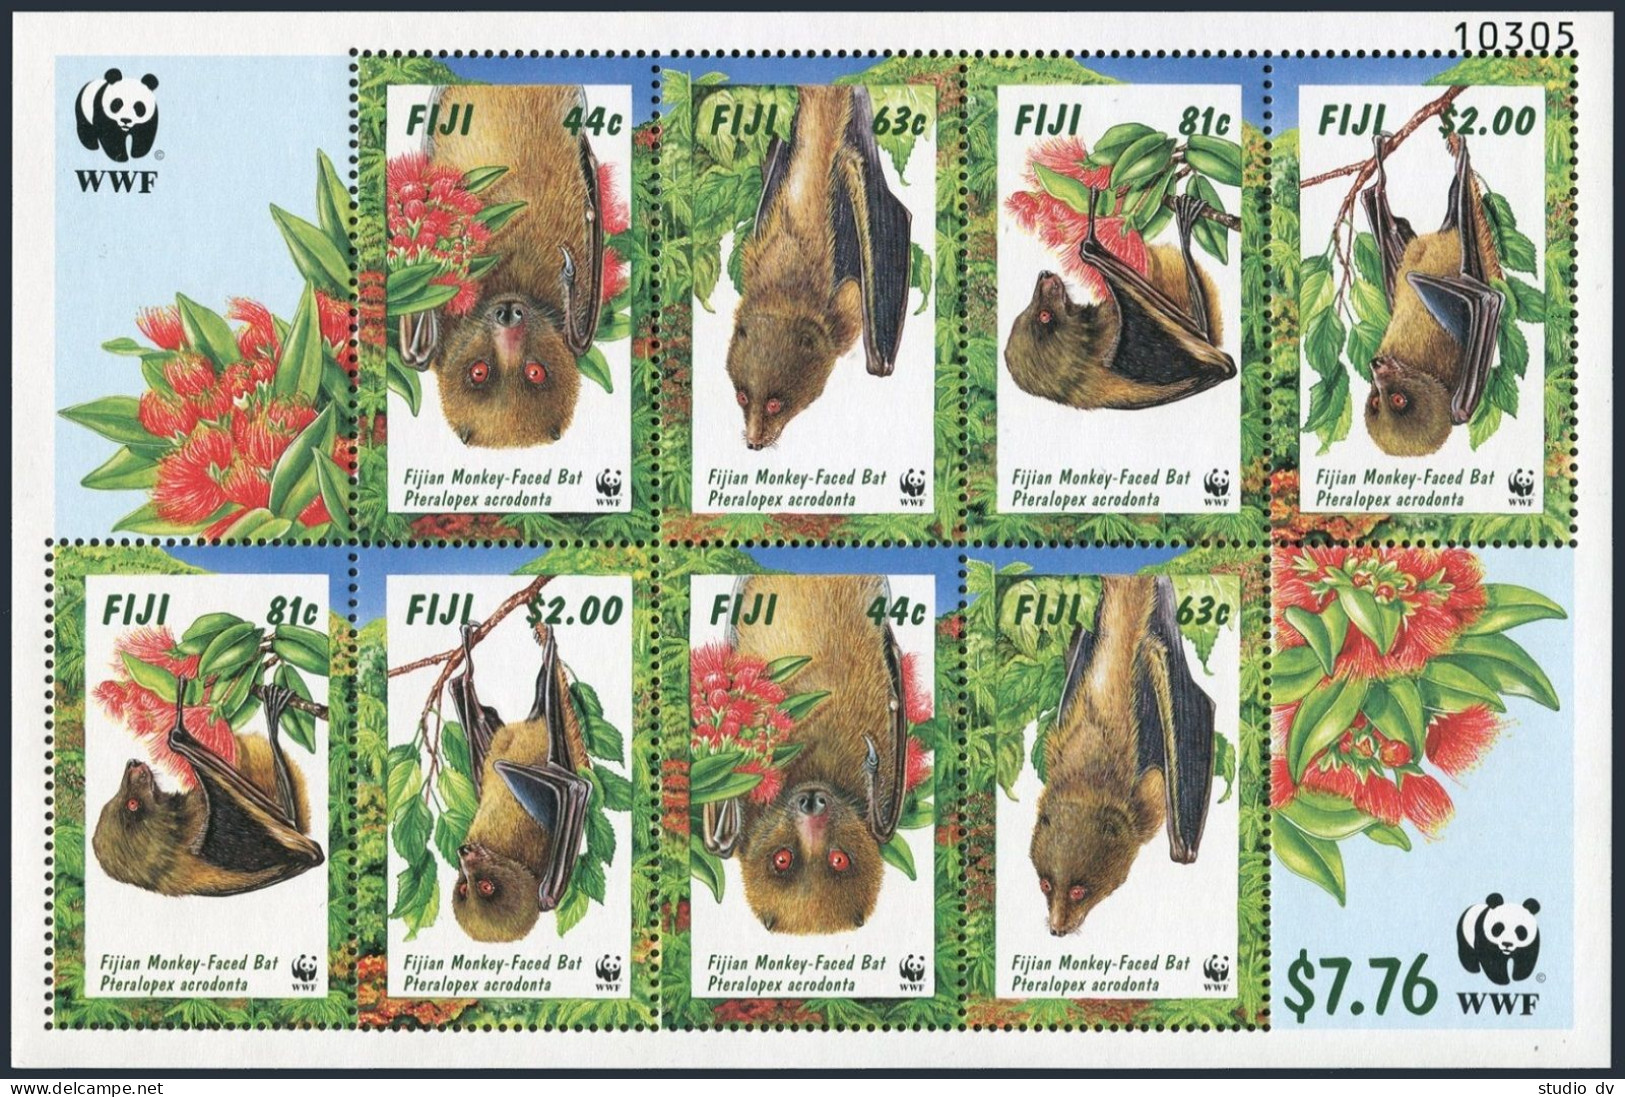 Fiji 800a Sheet, MNH. Michel 812-815 Klb. WWF 1997. Fijian Monkey-faced Bat. - Fiji (1970-...)